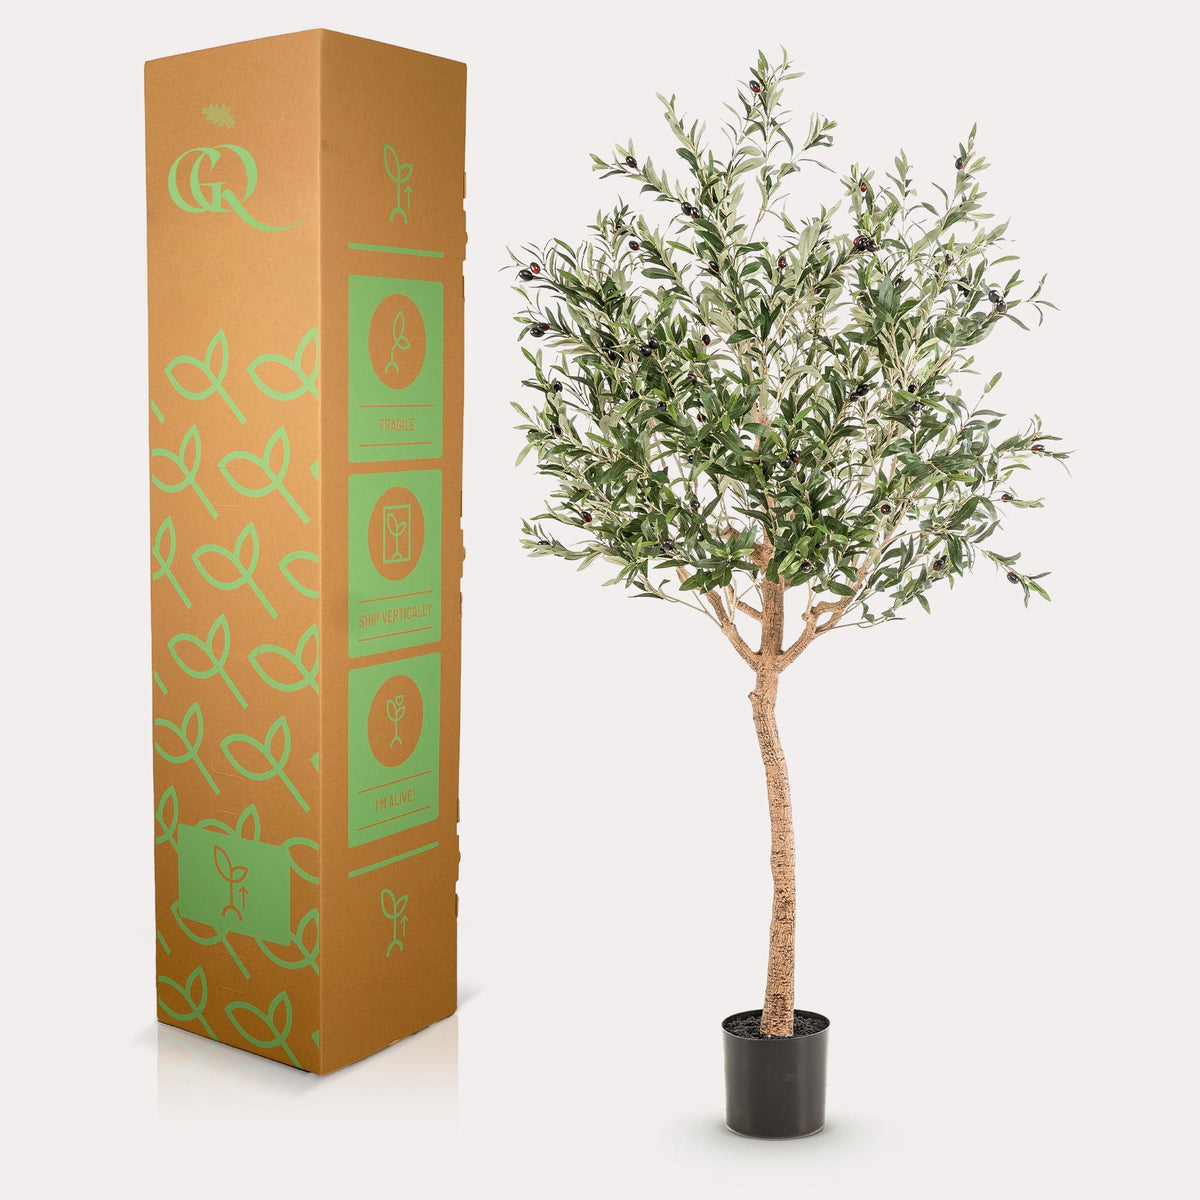 Olea Europaea - Olivenbaum - 180 cm - kunstpflanze